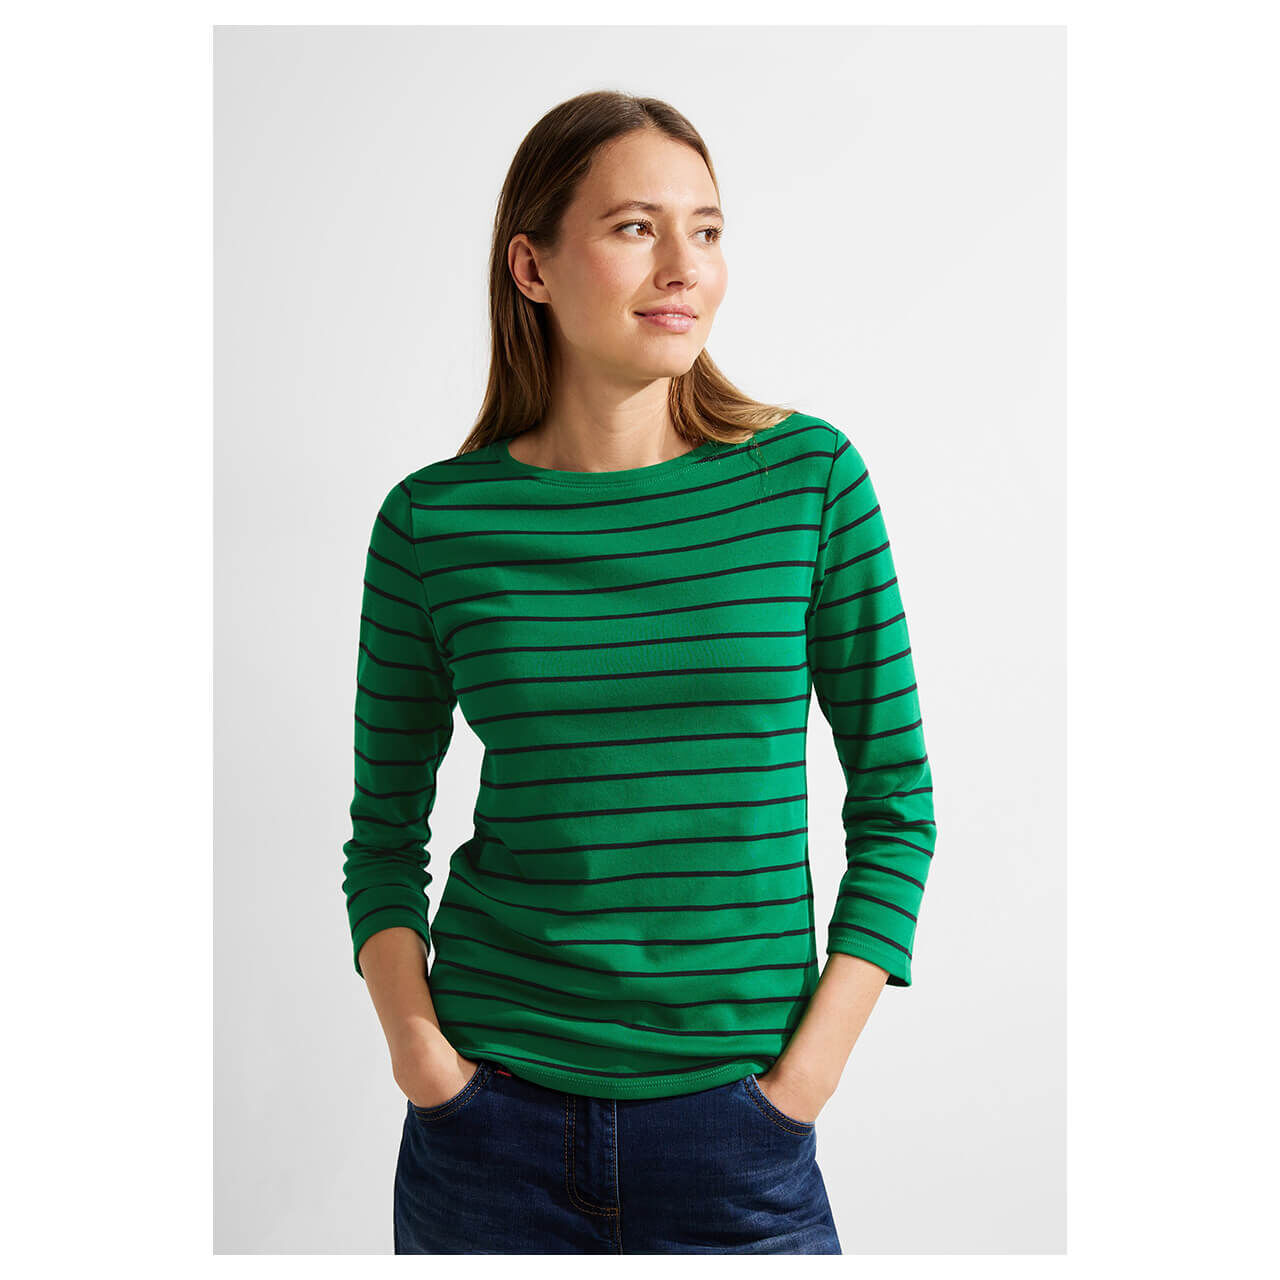 Cecil Damen 3/4 Arm Shirt Basic Boatneck easy green stripes